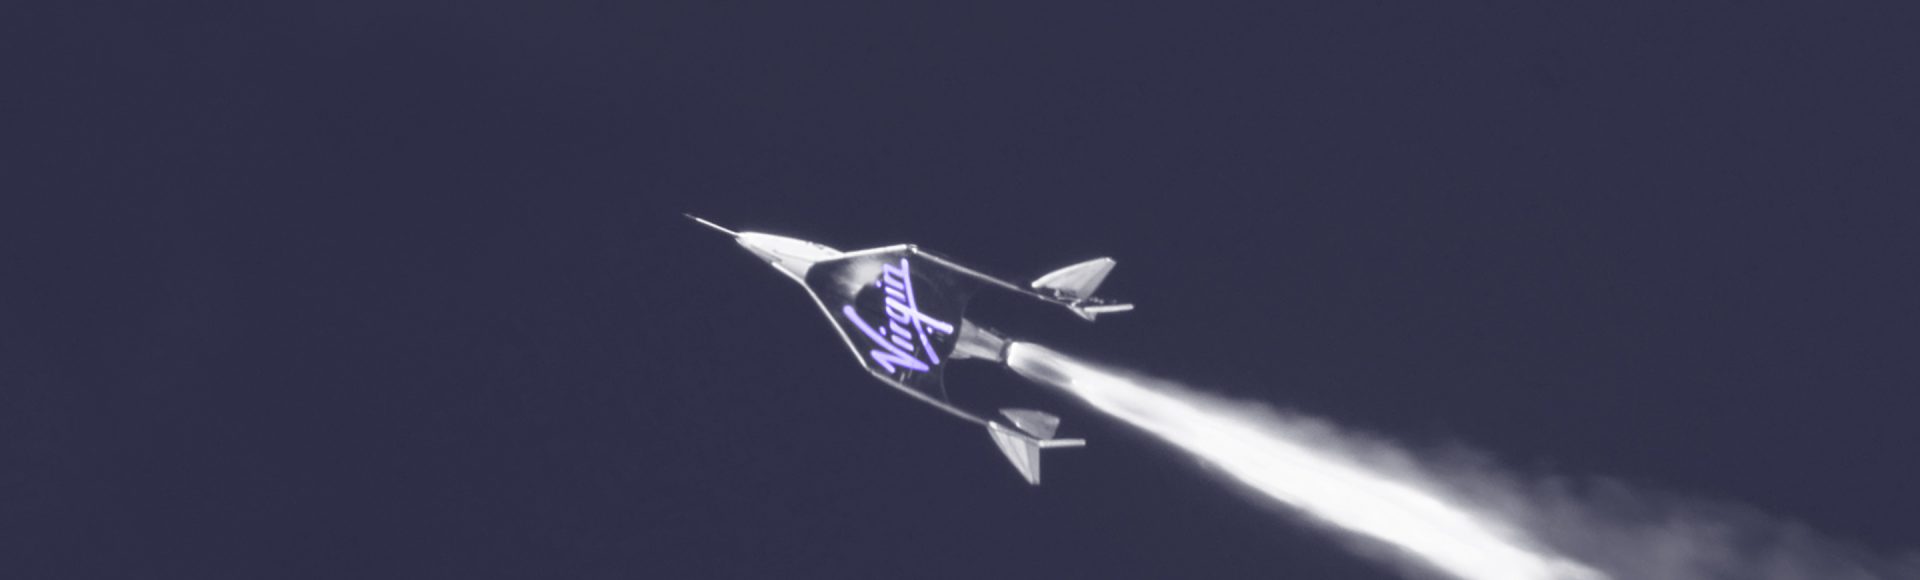 Hypersonic Flight Could Evolve Into a $270 Billion Market